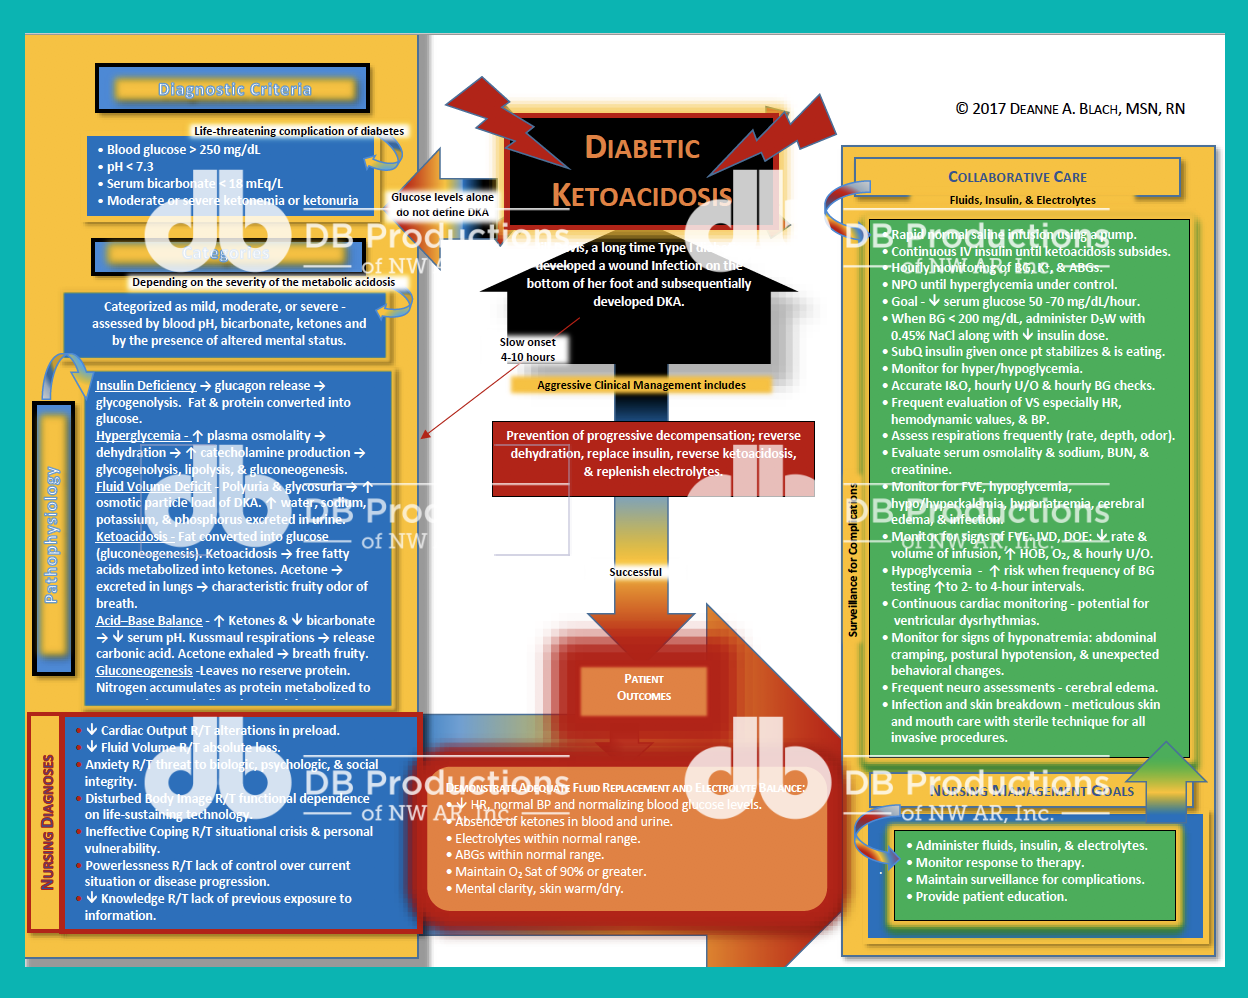 Diabetic Ketoacidosis Concept Map | Deanne Blach - DB Productions